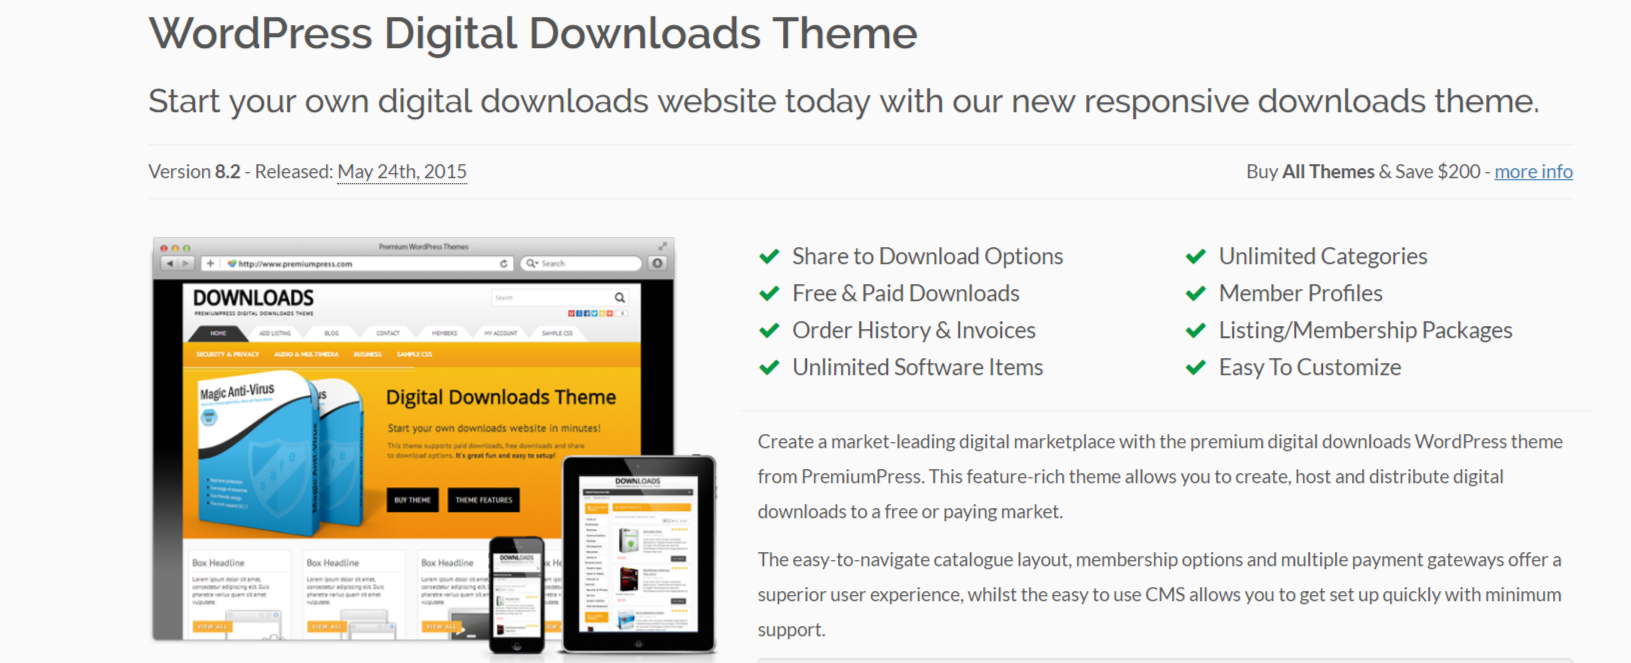 WordPress Digital Downloads Theme - PremiumPress Review